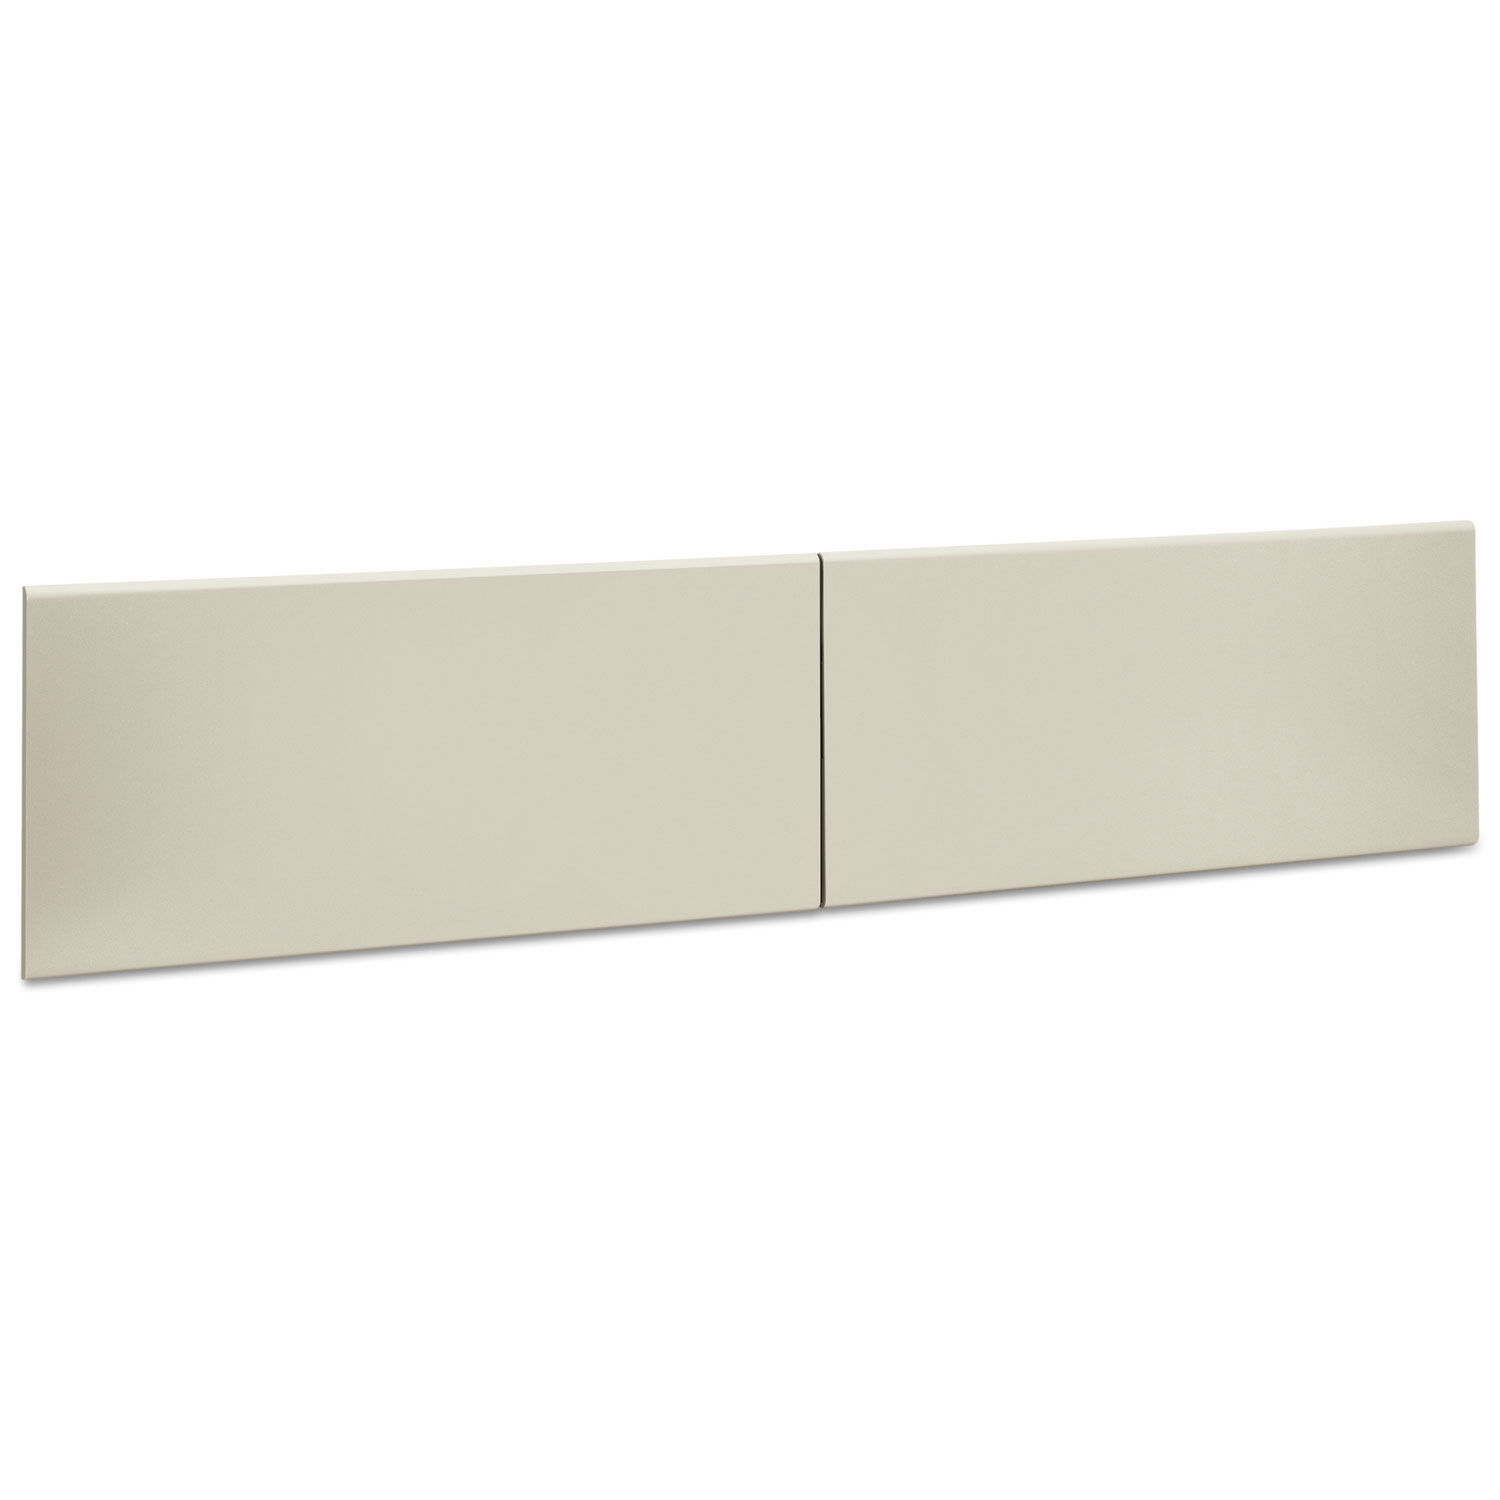 38000 Series Hutch Flipper Doors For 72"w Open Shelf 36w x 15h, Light Gray